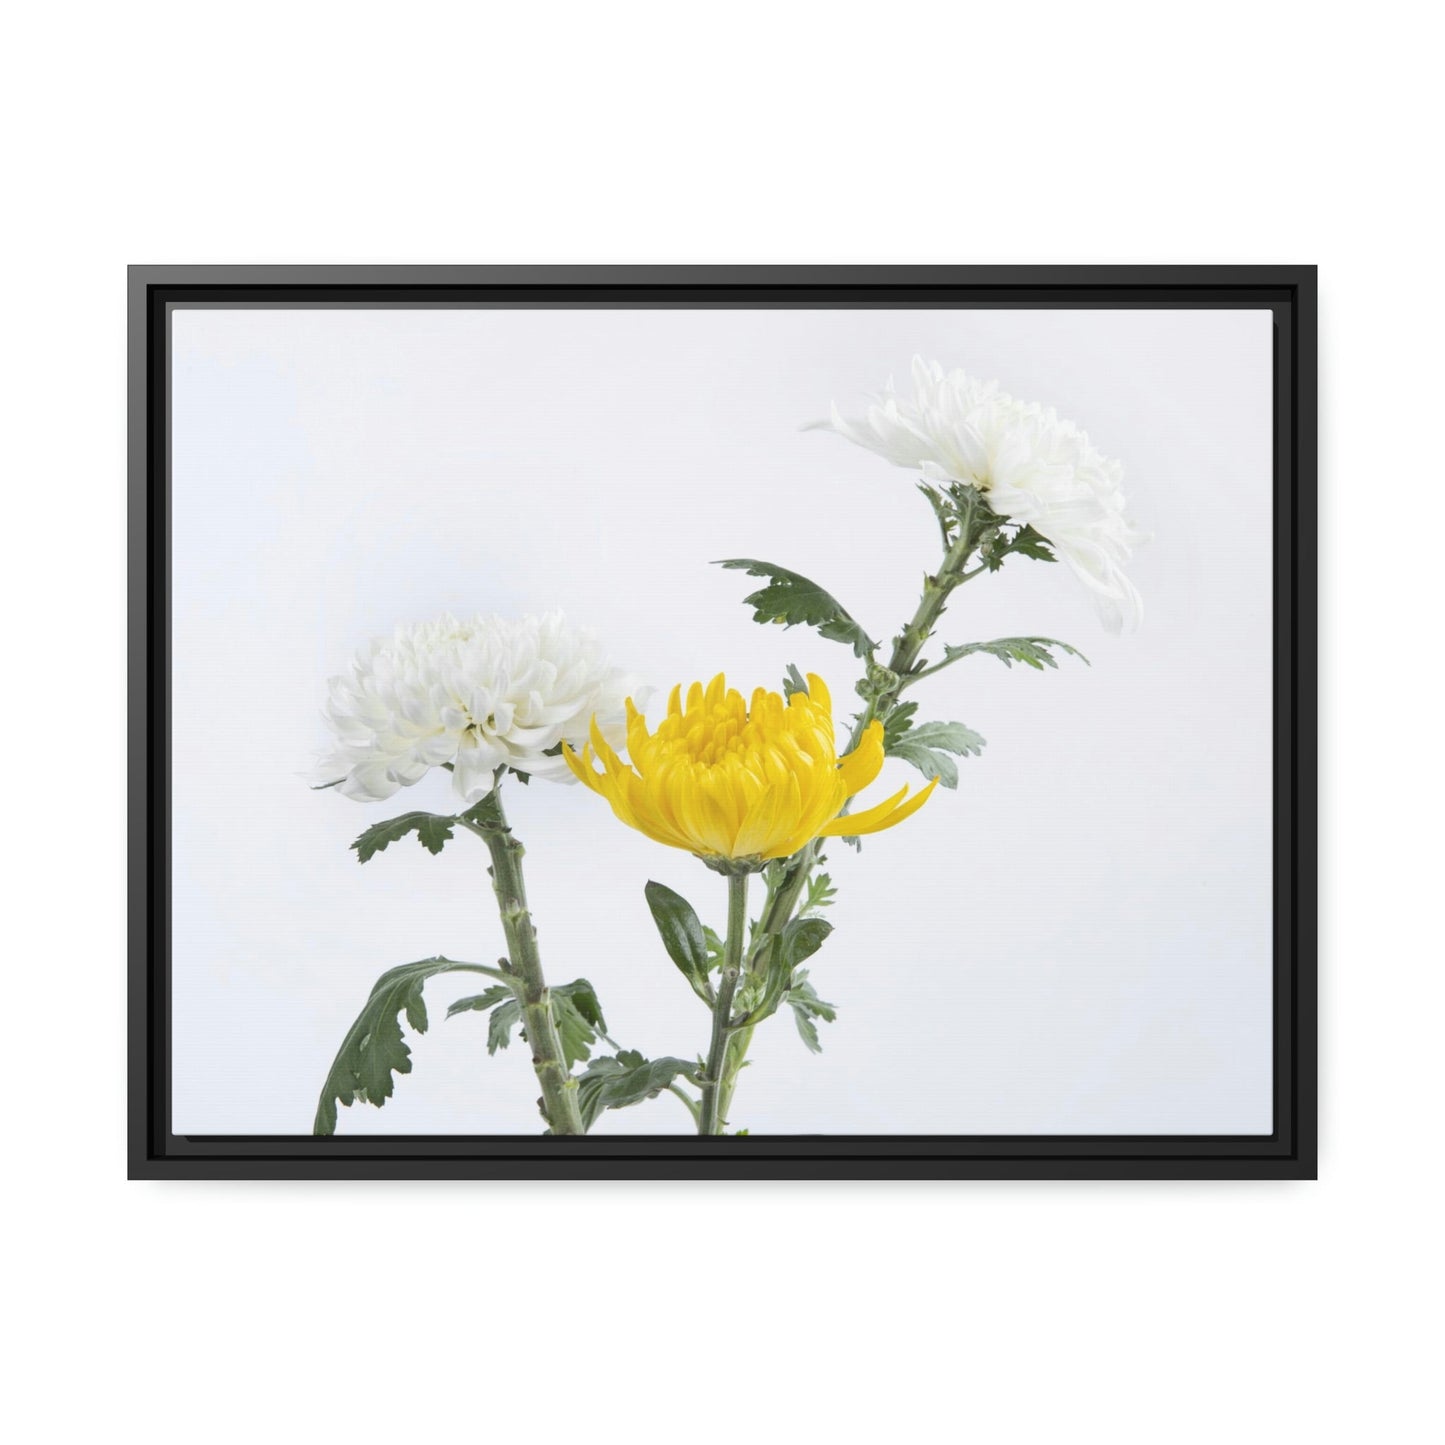 Floral Bliss: Poster & Canvas Art with Joyful Chrysanthemum Bouquet